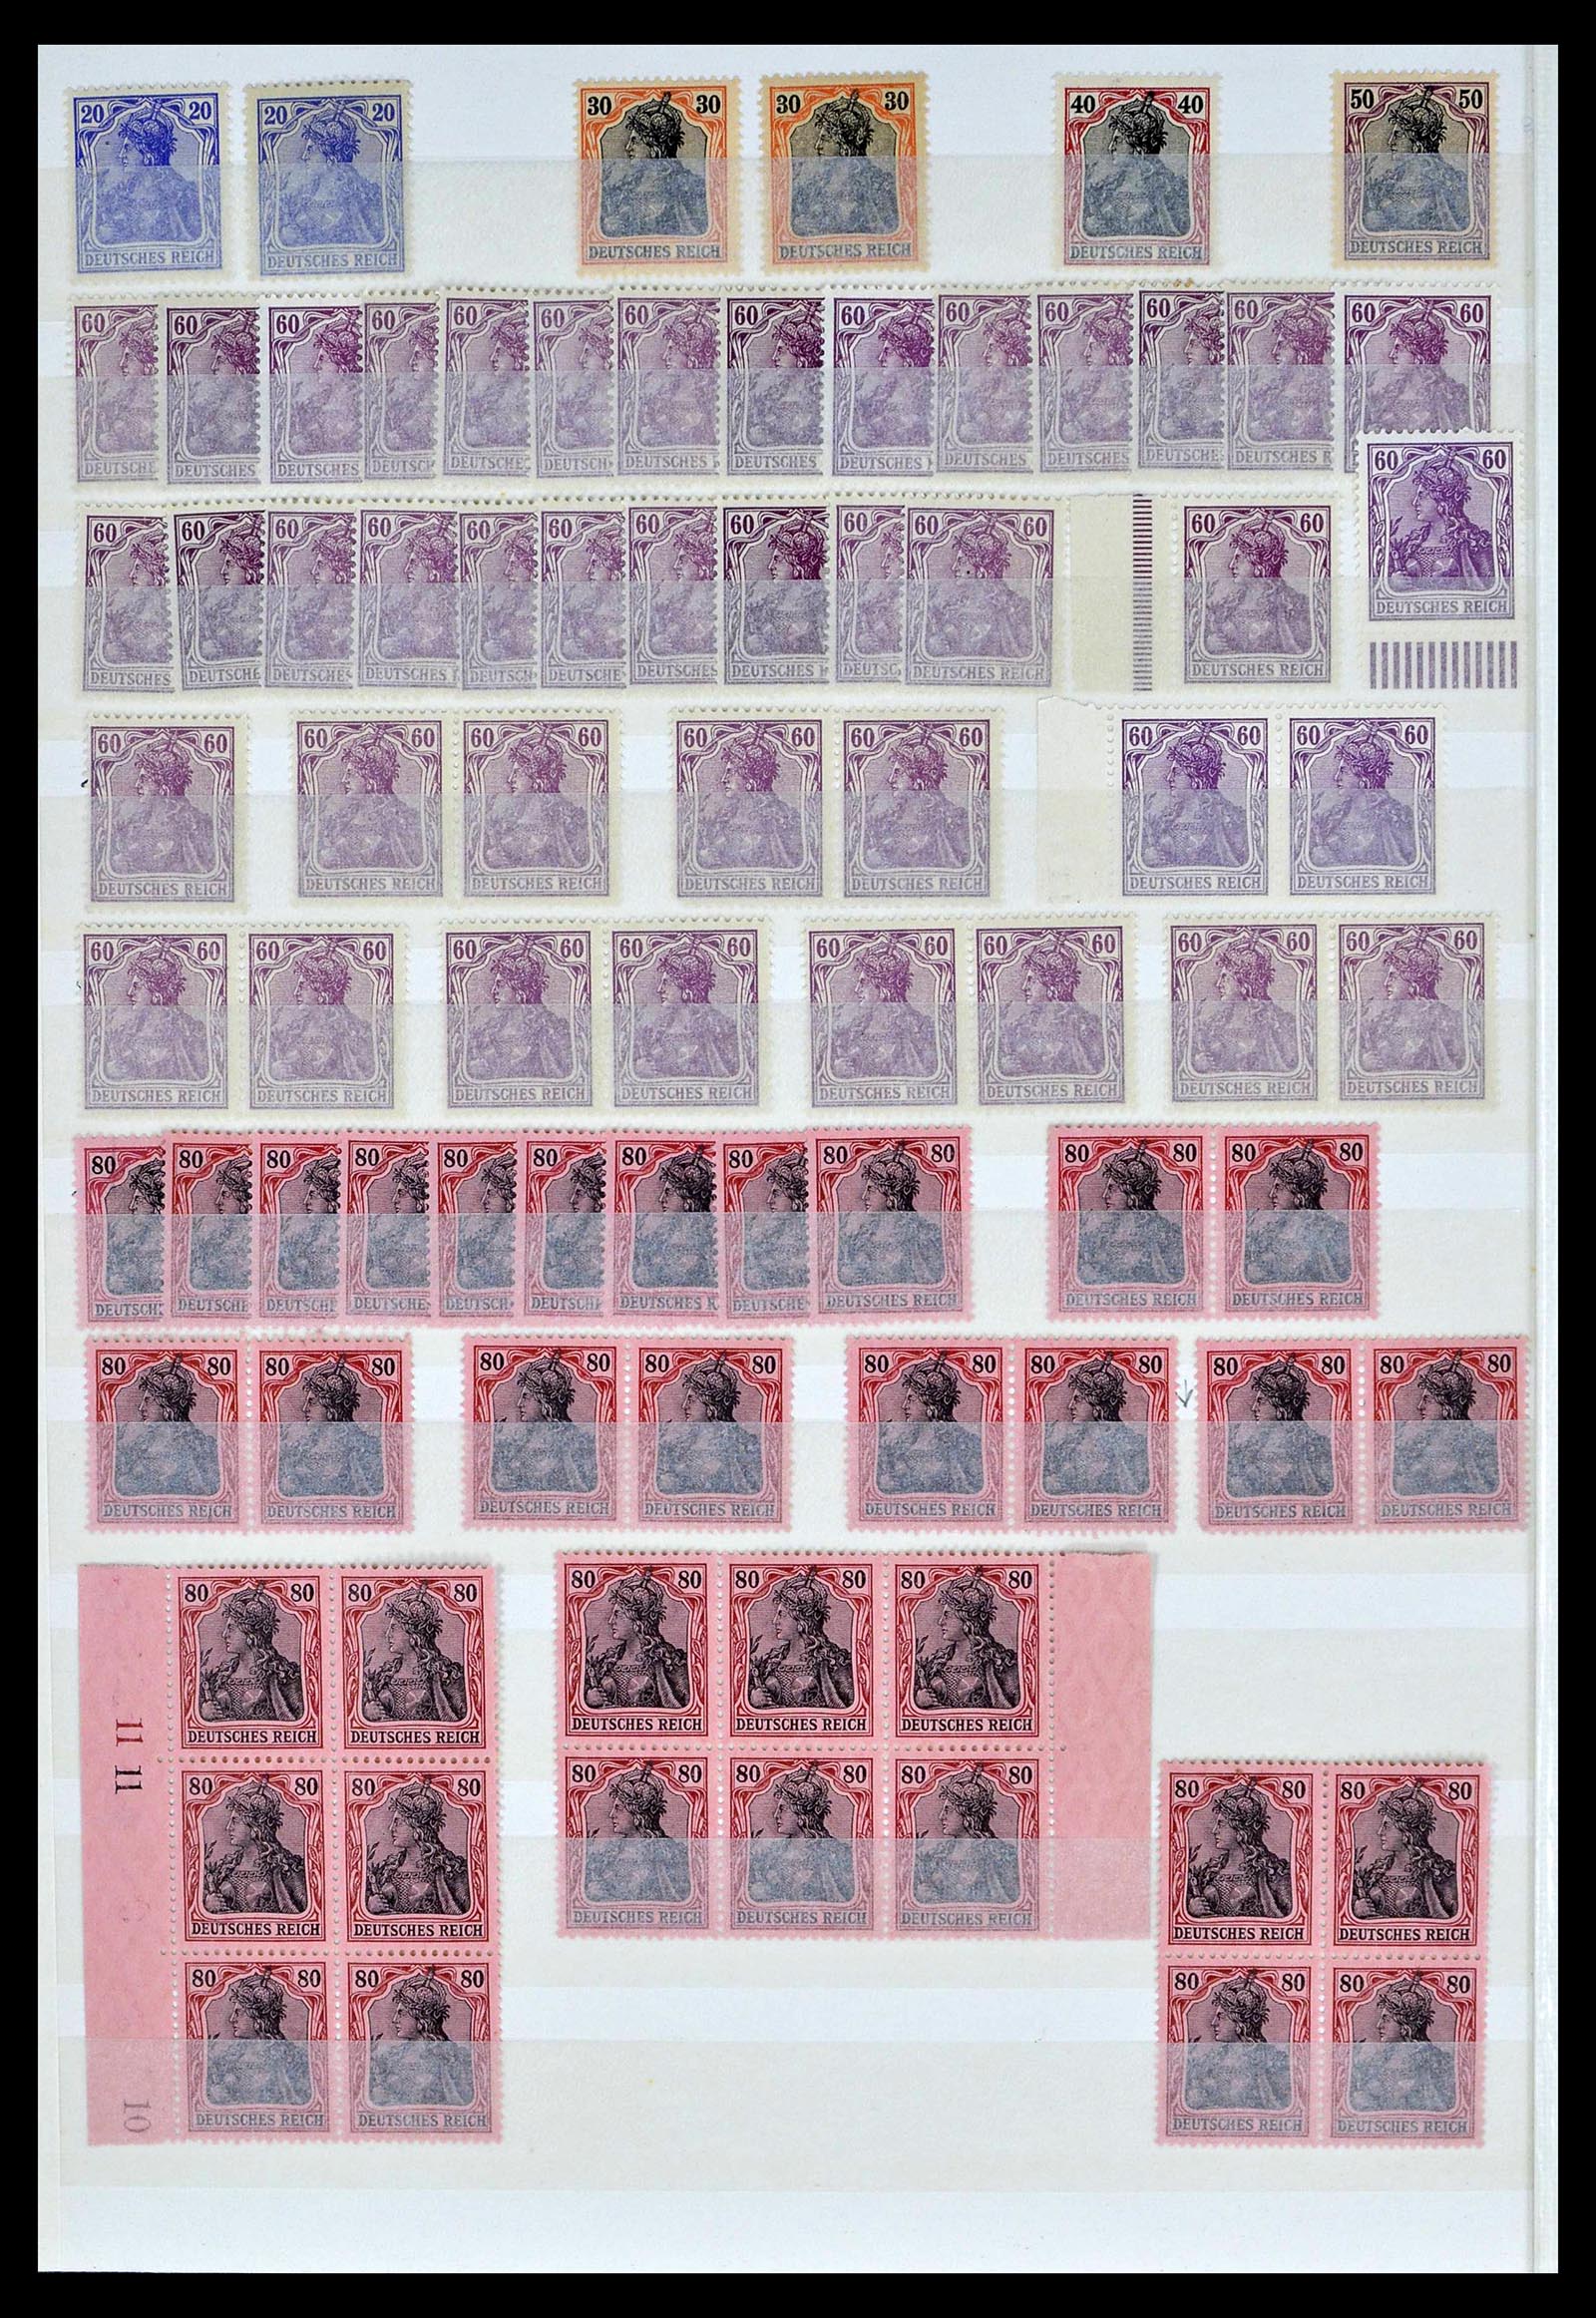 39256 0004 - Stamp collection 39256 German Reich MNH.